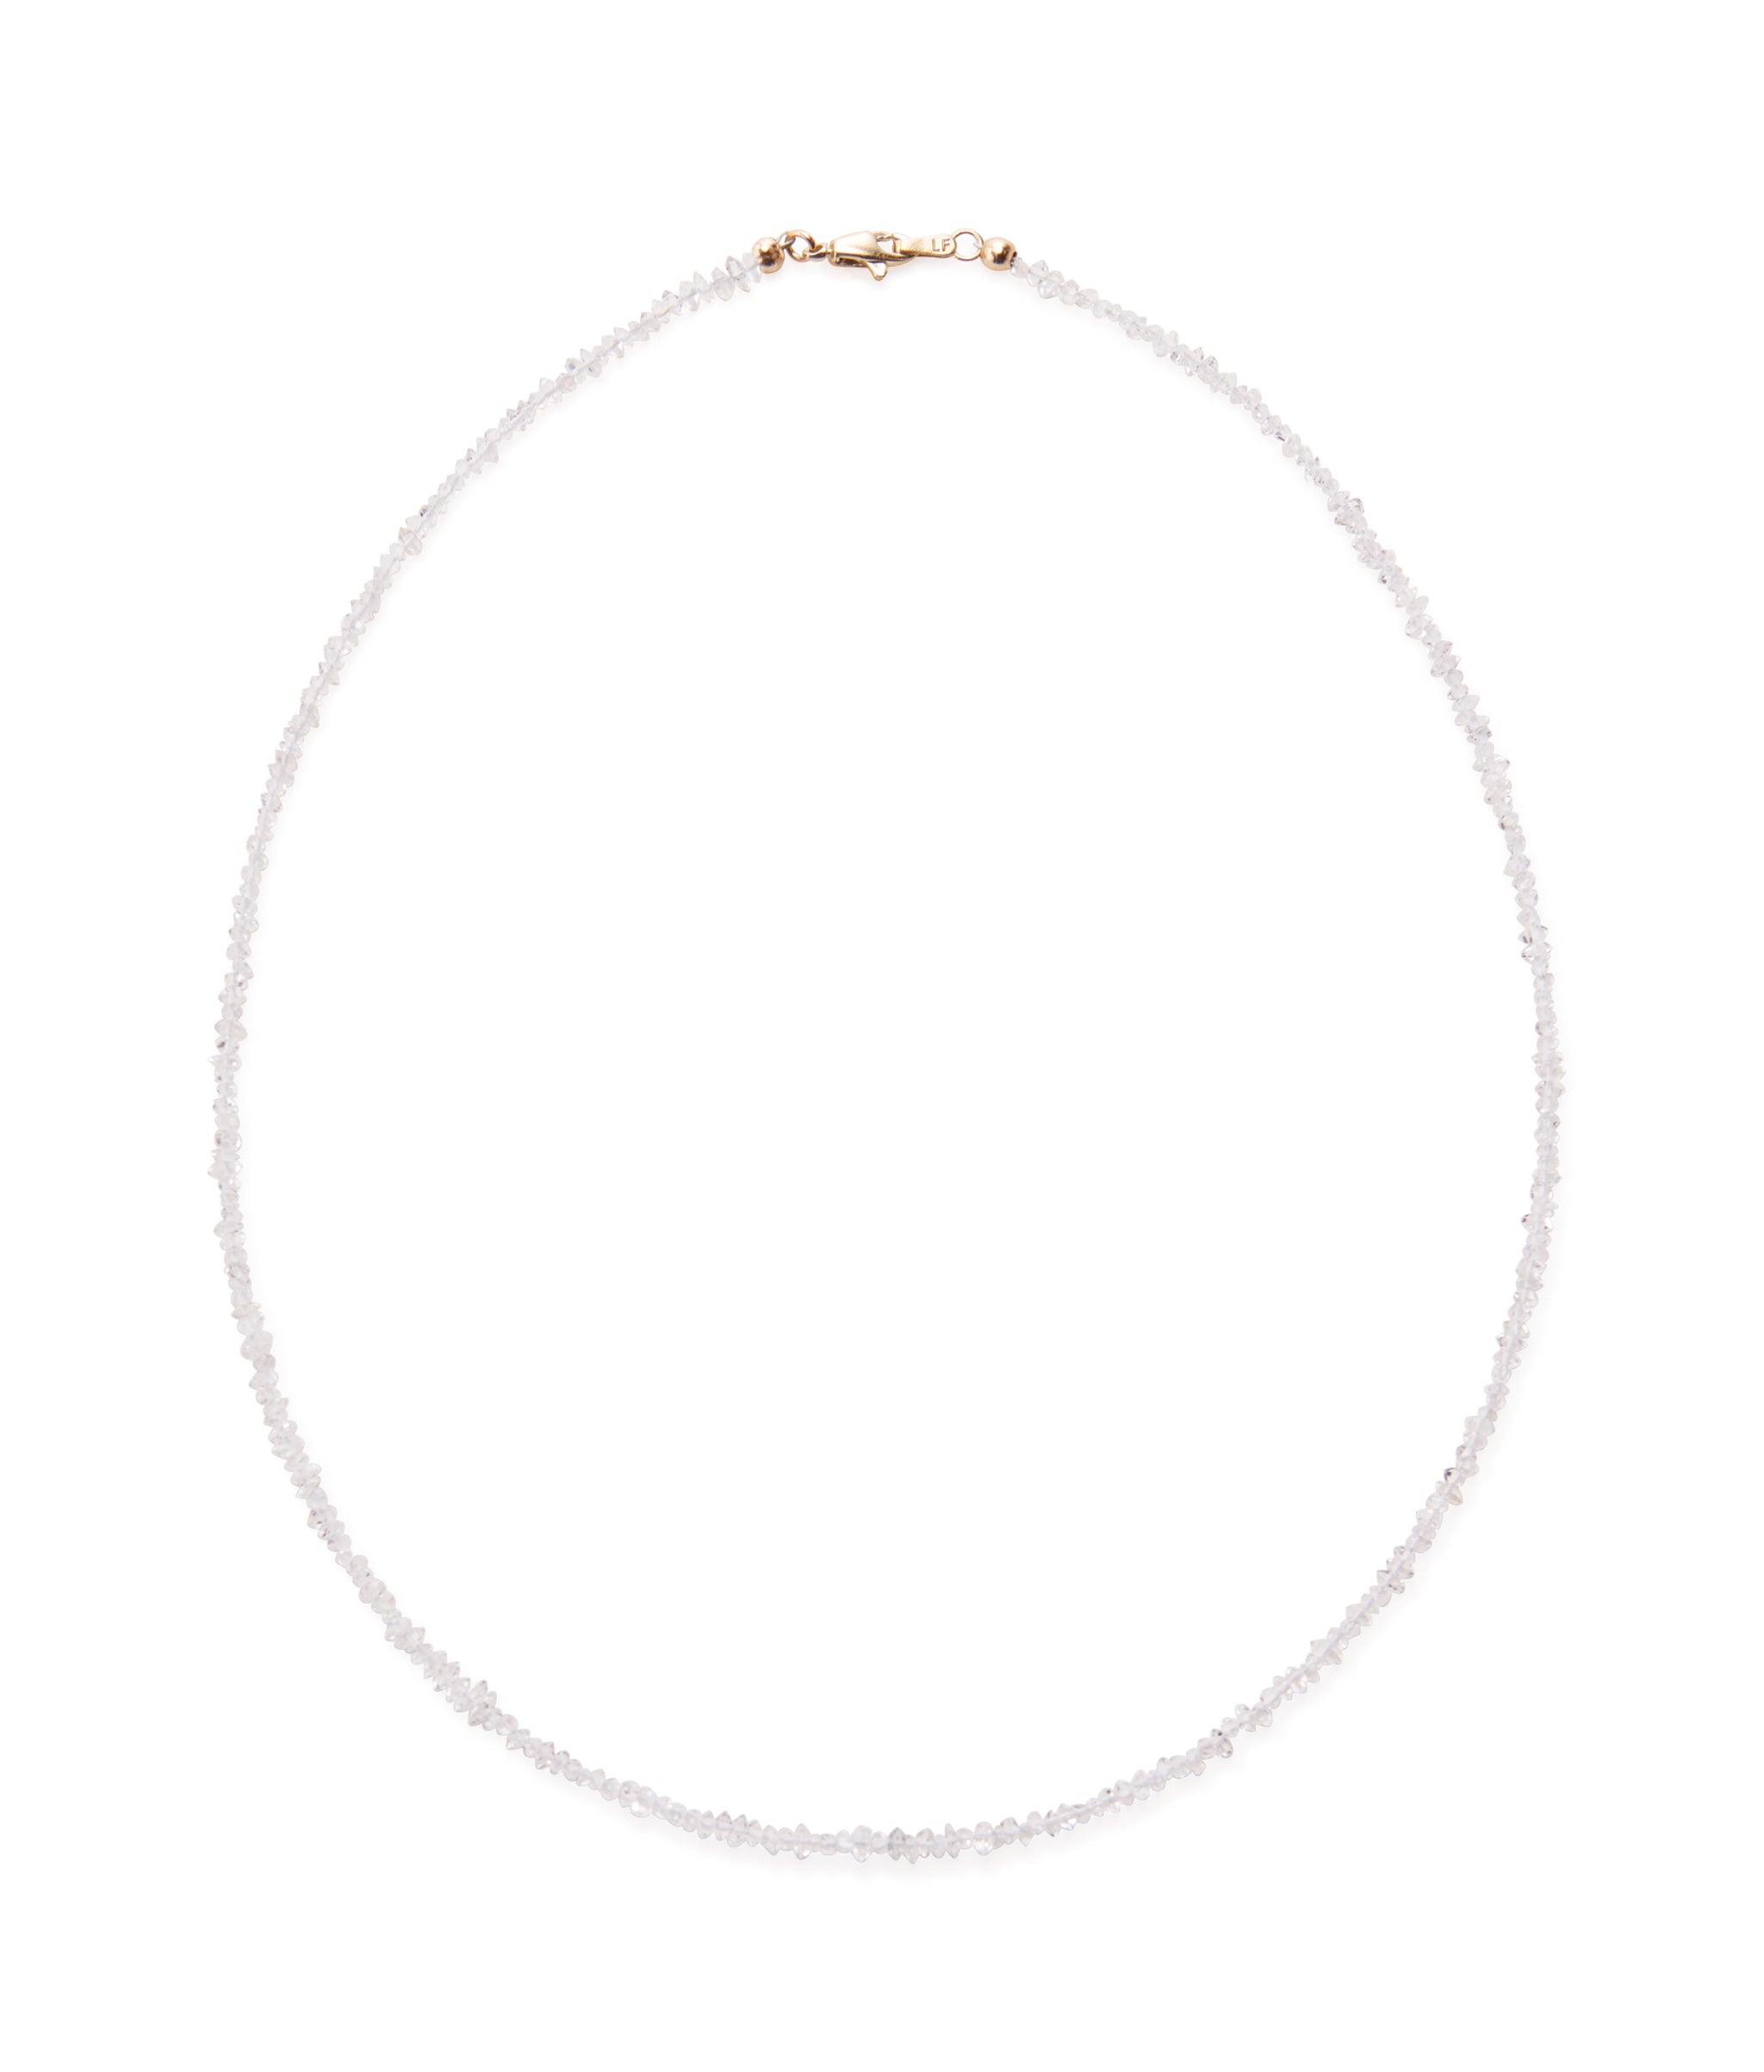 Tiny Beaded 14k Gold and Herkimer Diamond Quartz Necklace. tiny faceted diamond quartz beads with gold lobster clasp.